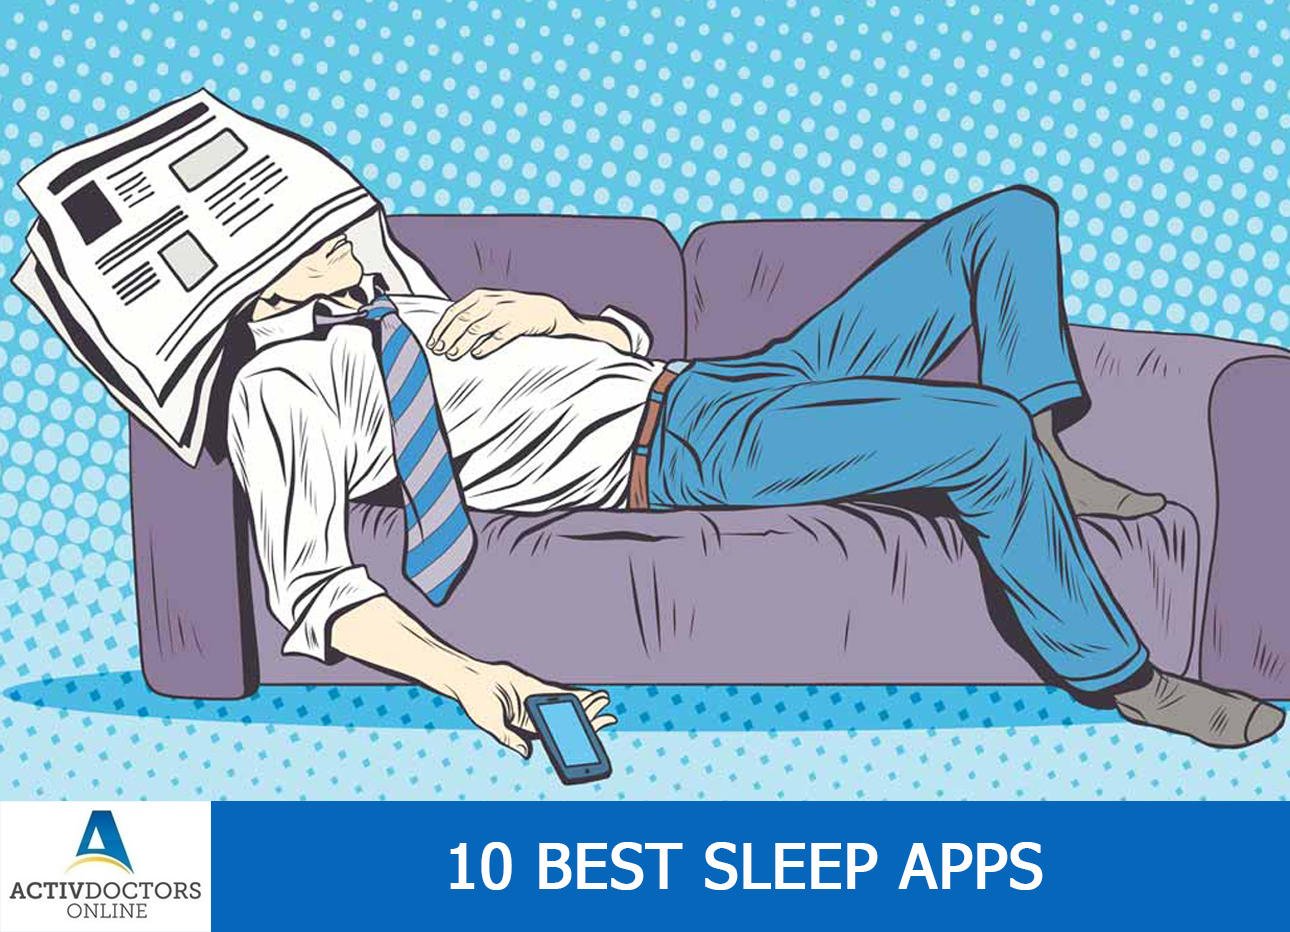 10 BEST SLEEP APPS